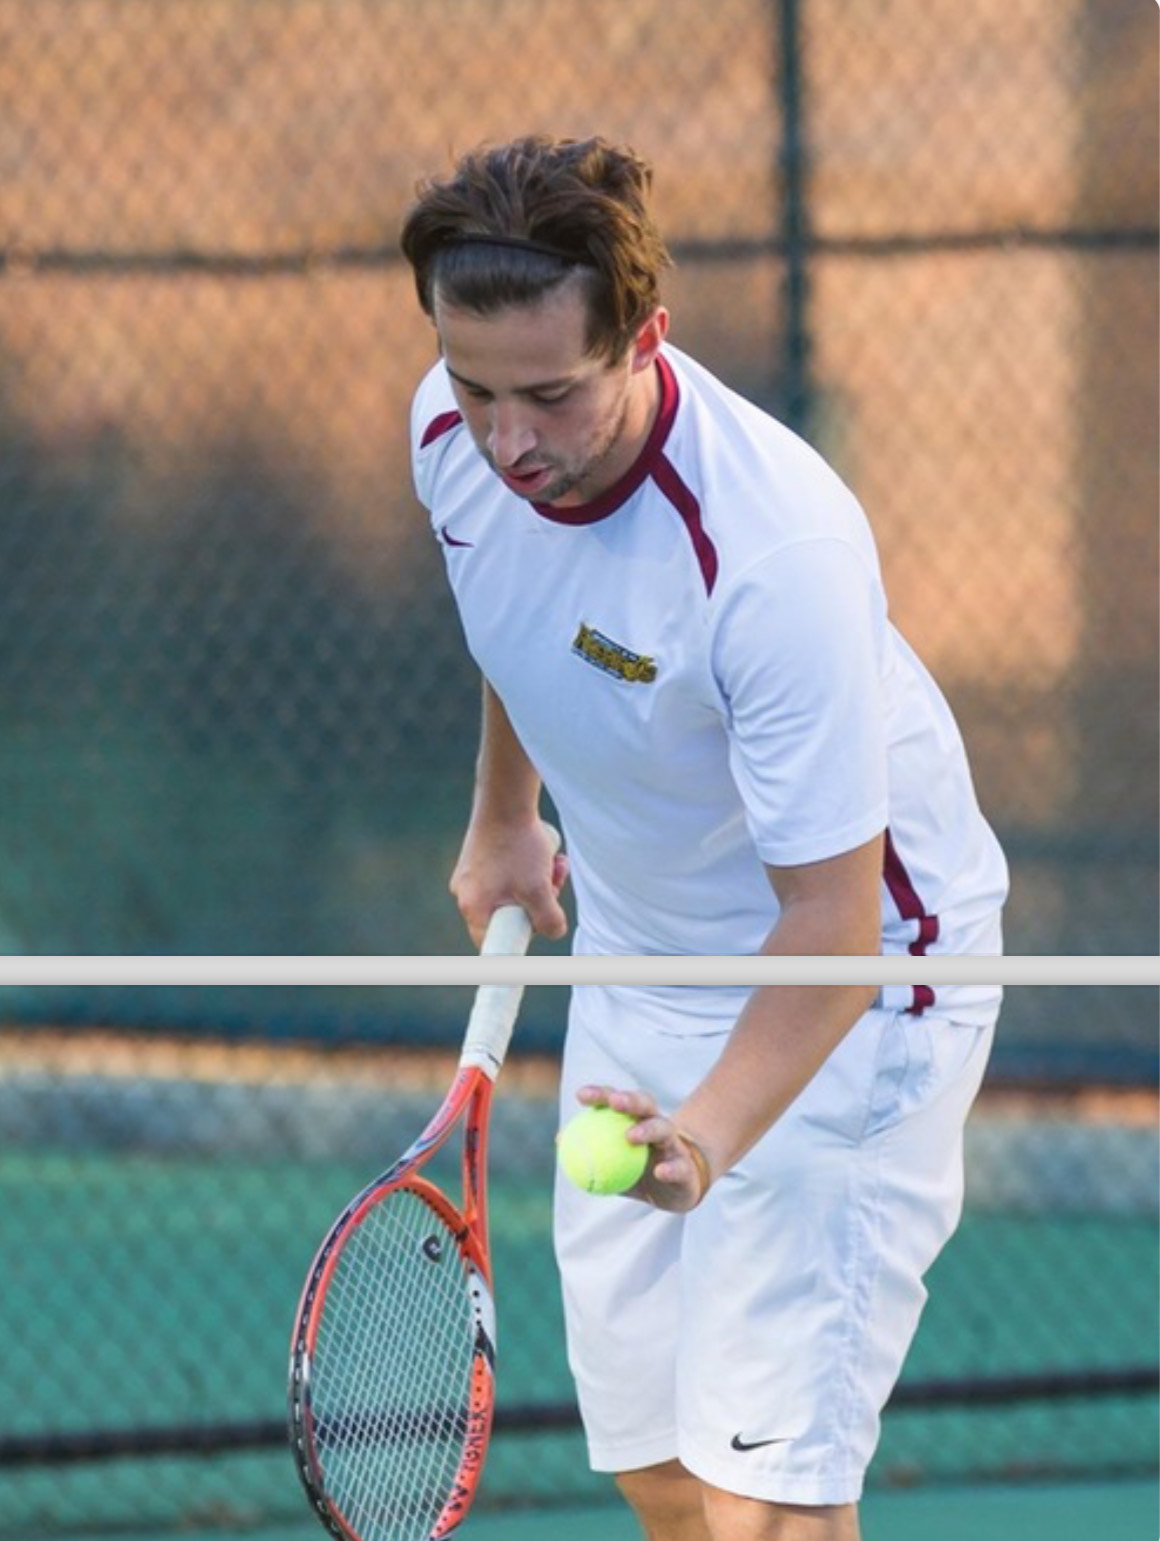 Marco teaches tennis lessons in Washington, Dc, DC